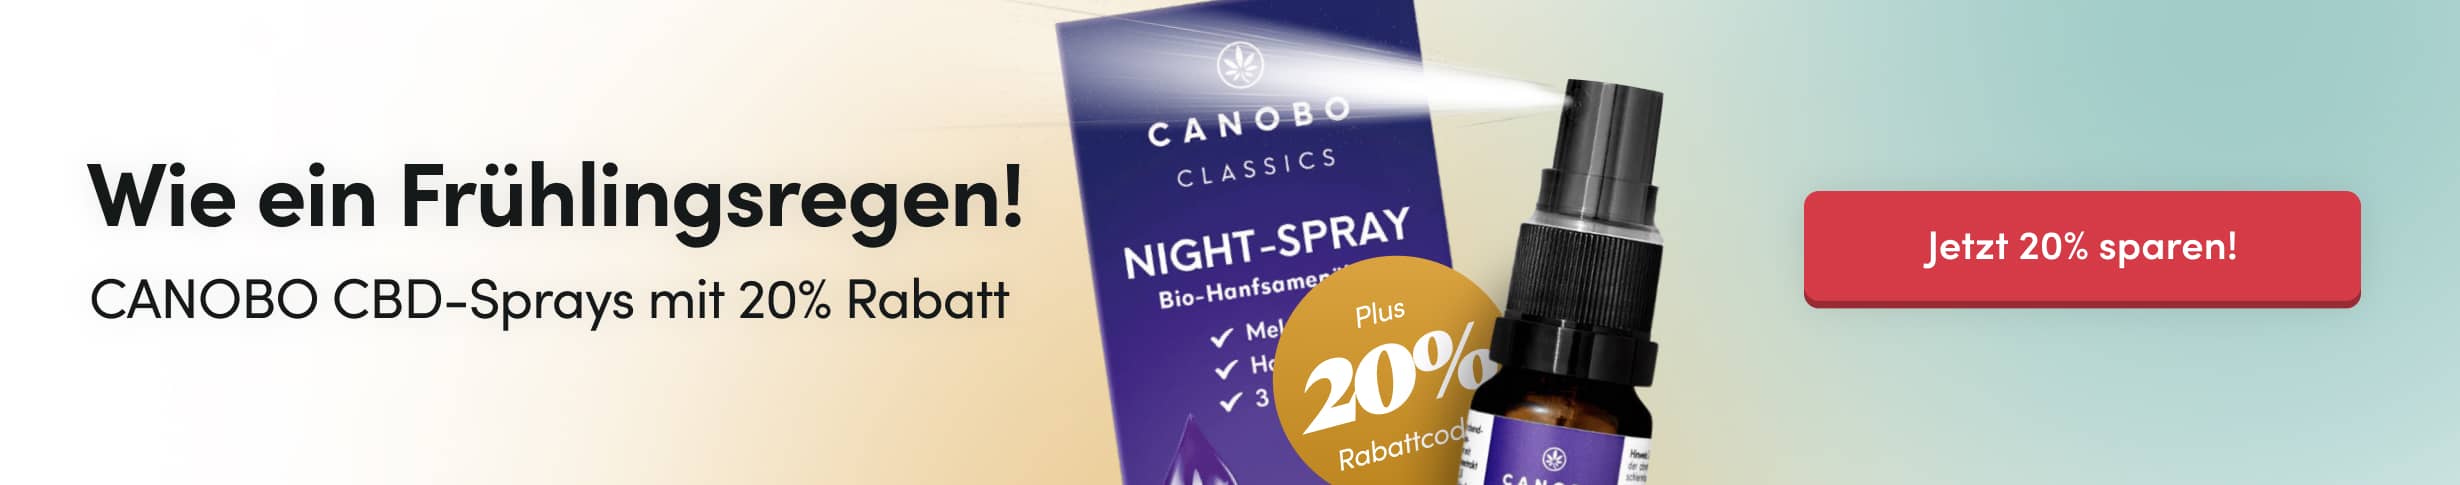 Canobo CBD Spray mit 20% Rabatt